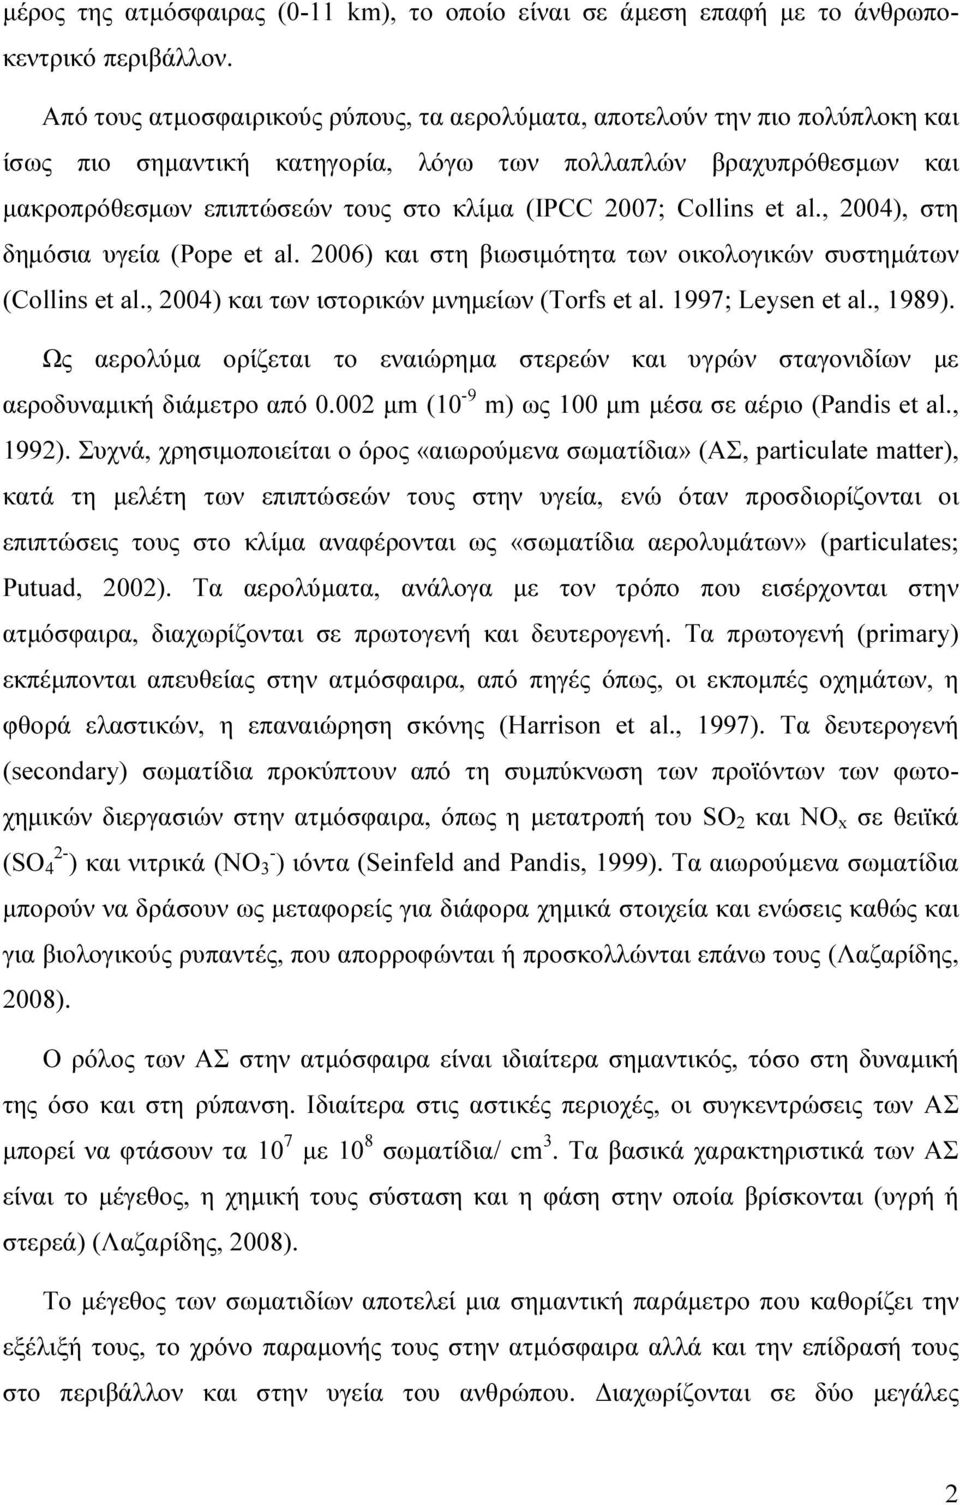 Collins et al., 2004), στη δηµόσια υγεία (Pope et al. 2006) και στη βιωσιµότητα των οικολογικών συστηµάτων (Collins et al., 2004) και των ιστορικών µνηµείων (Torfs et al. 1997; Leysen et al., 1989).